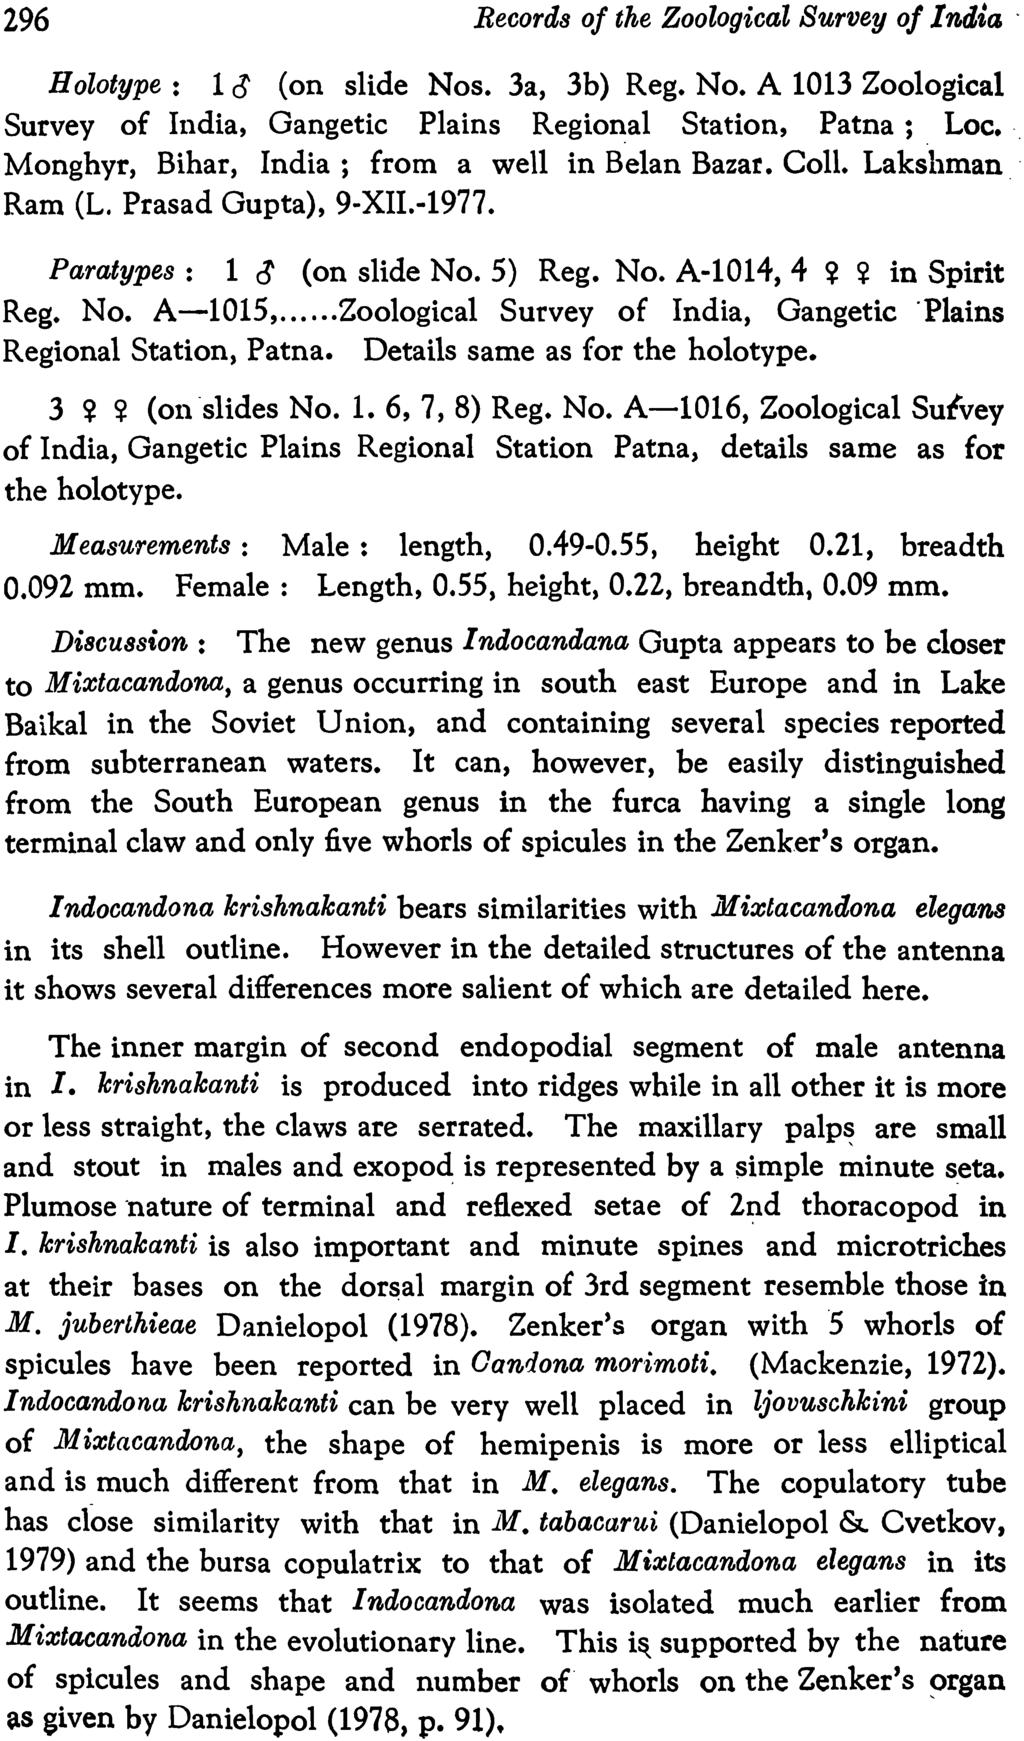 296 Records of the ZoologicaZ Survey oj 1 nrjia. Holotype: 1 0 (on slide Nos. 3a, 3b) Reg. No. A 1013 Zoological Survey of India, Gangetic Plains Regio~al Station, Patna;. Loe.